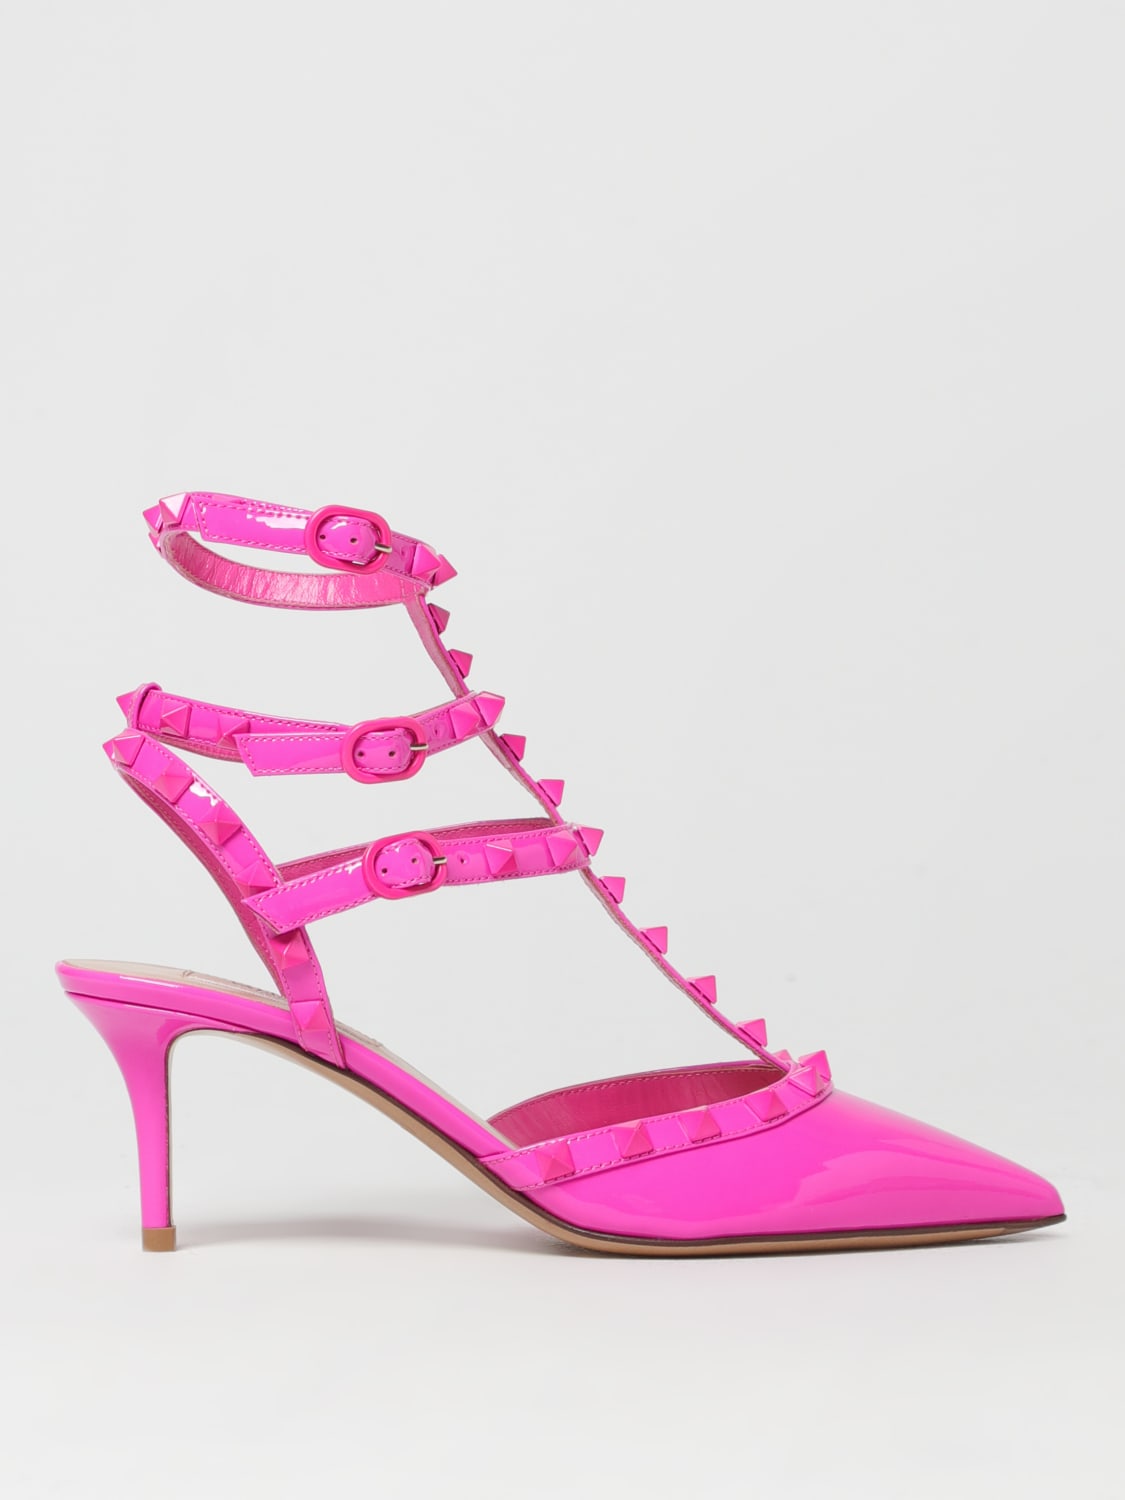 Calamity flygtninge Glæd dig VALENTINO GARAVANI: Rockstud pumps in patent leather with studs - Pink |  Valentino Garavani high heel shoes 3W2S0375YPX online at GIGLIO.COM